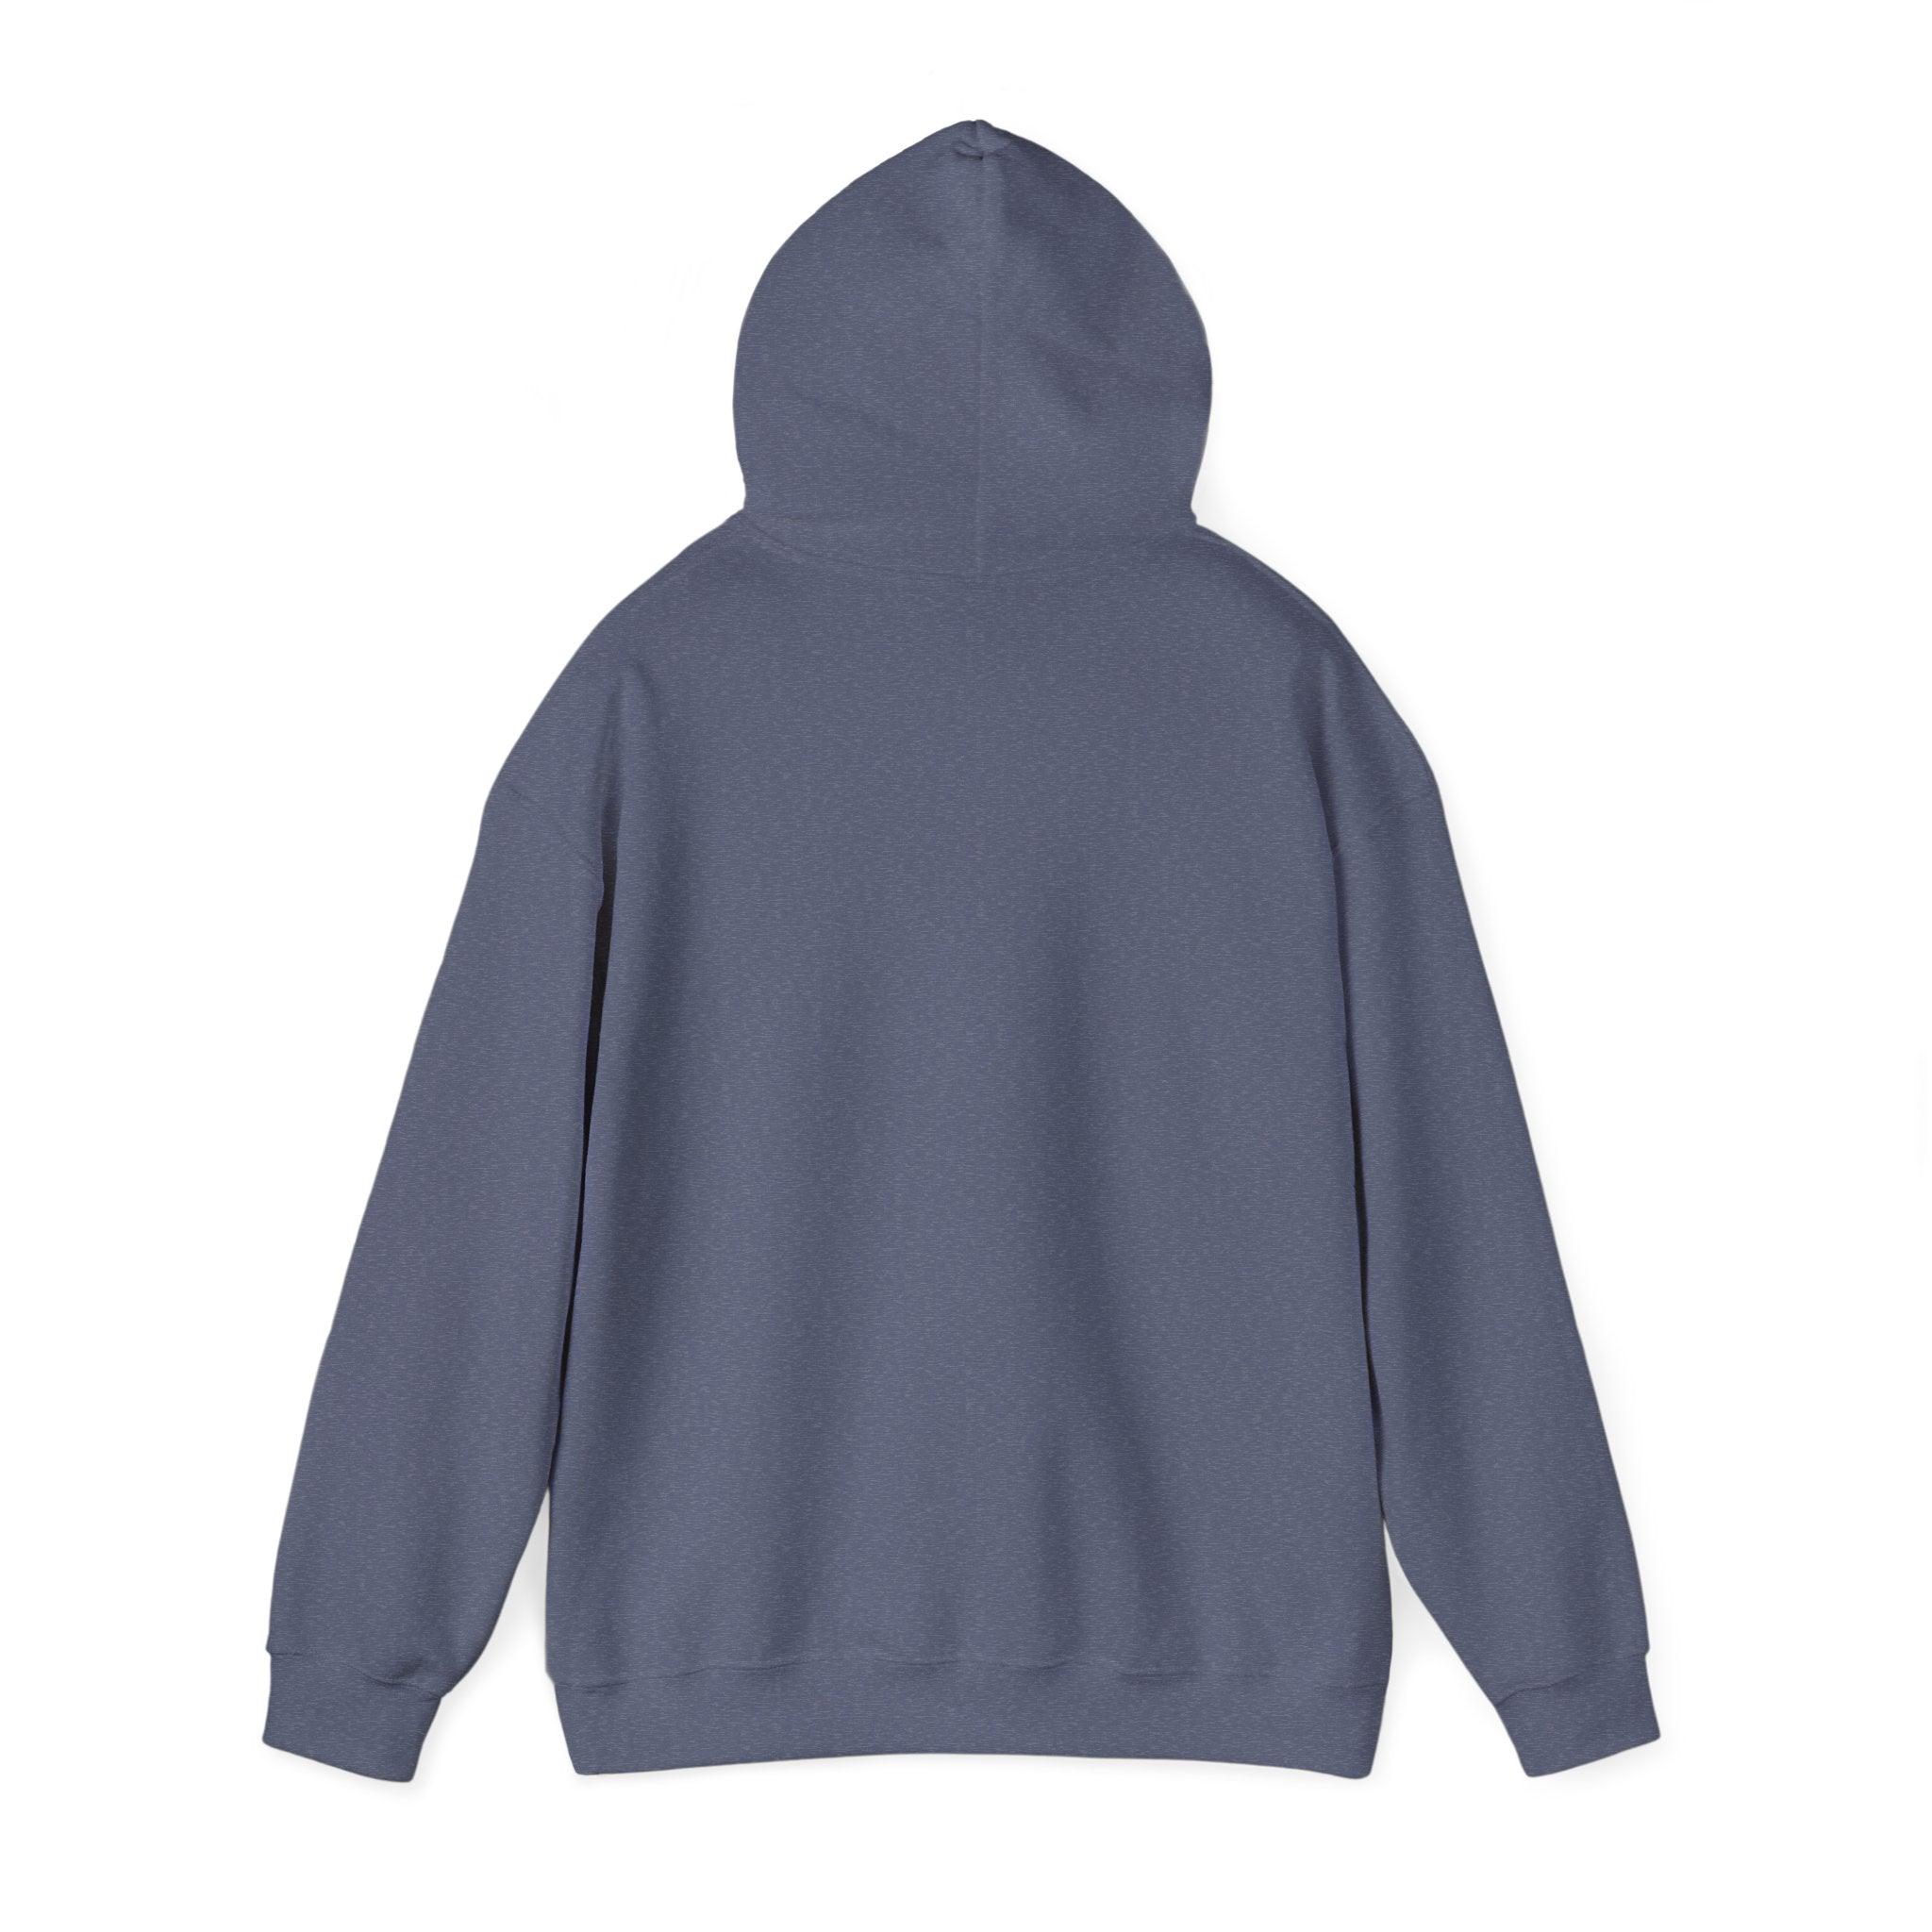 I Heart Weed Unisex Heavy Blend™ Hooded Sweatshirt